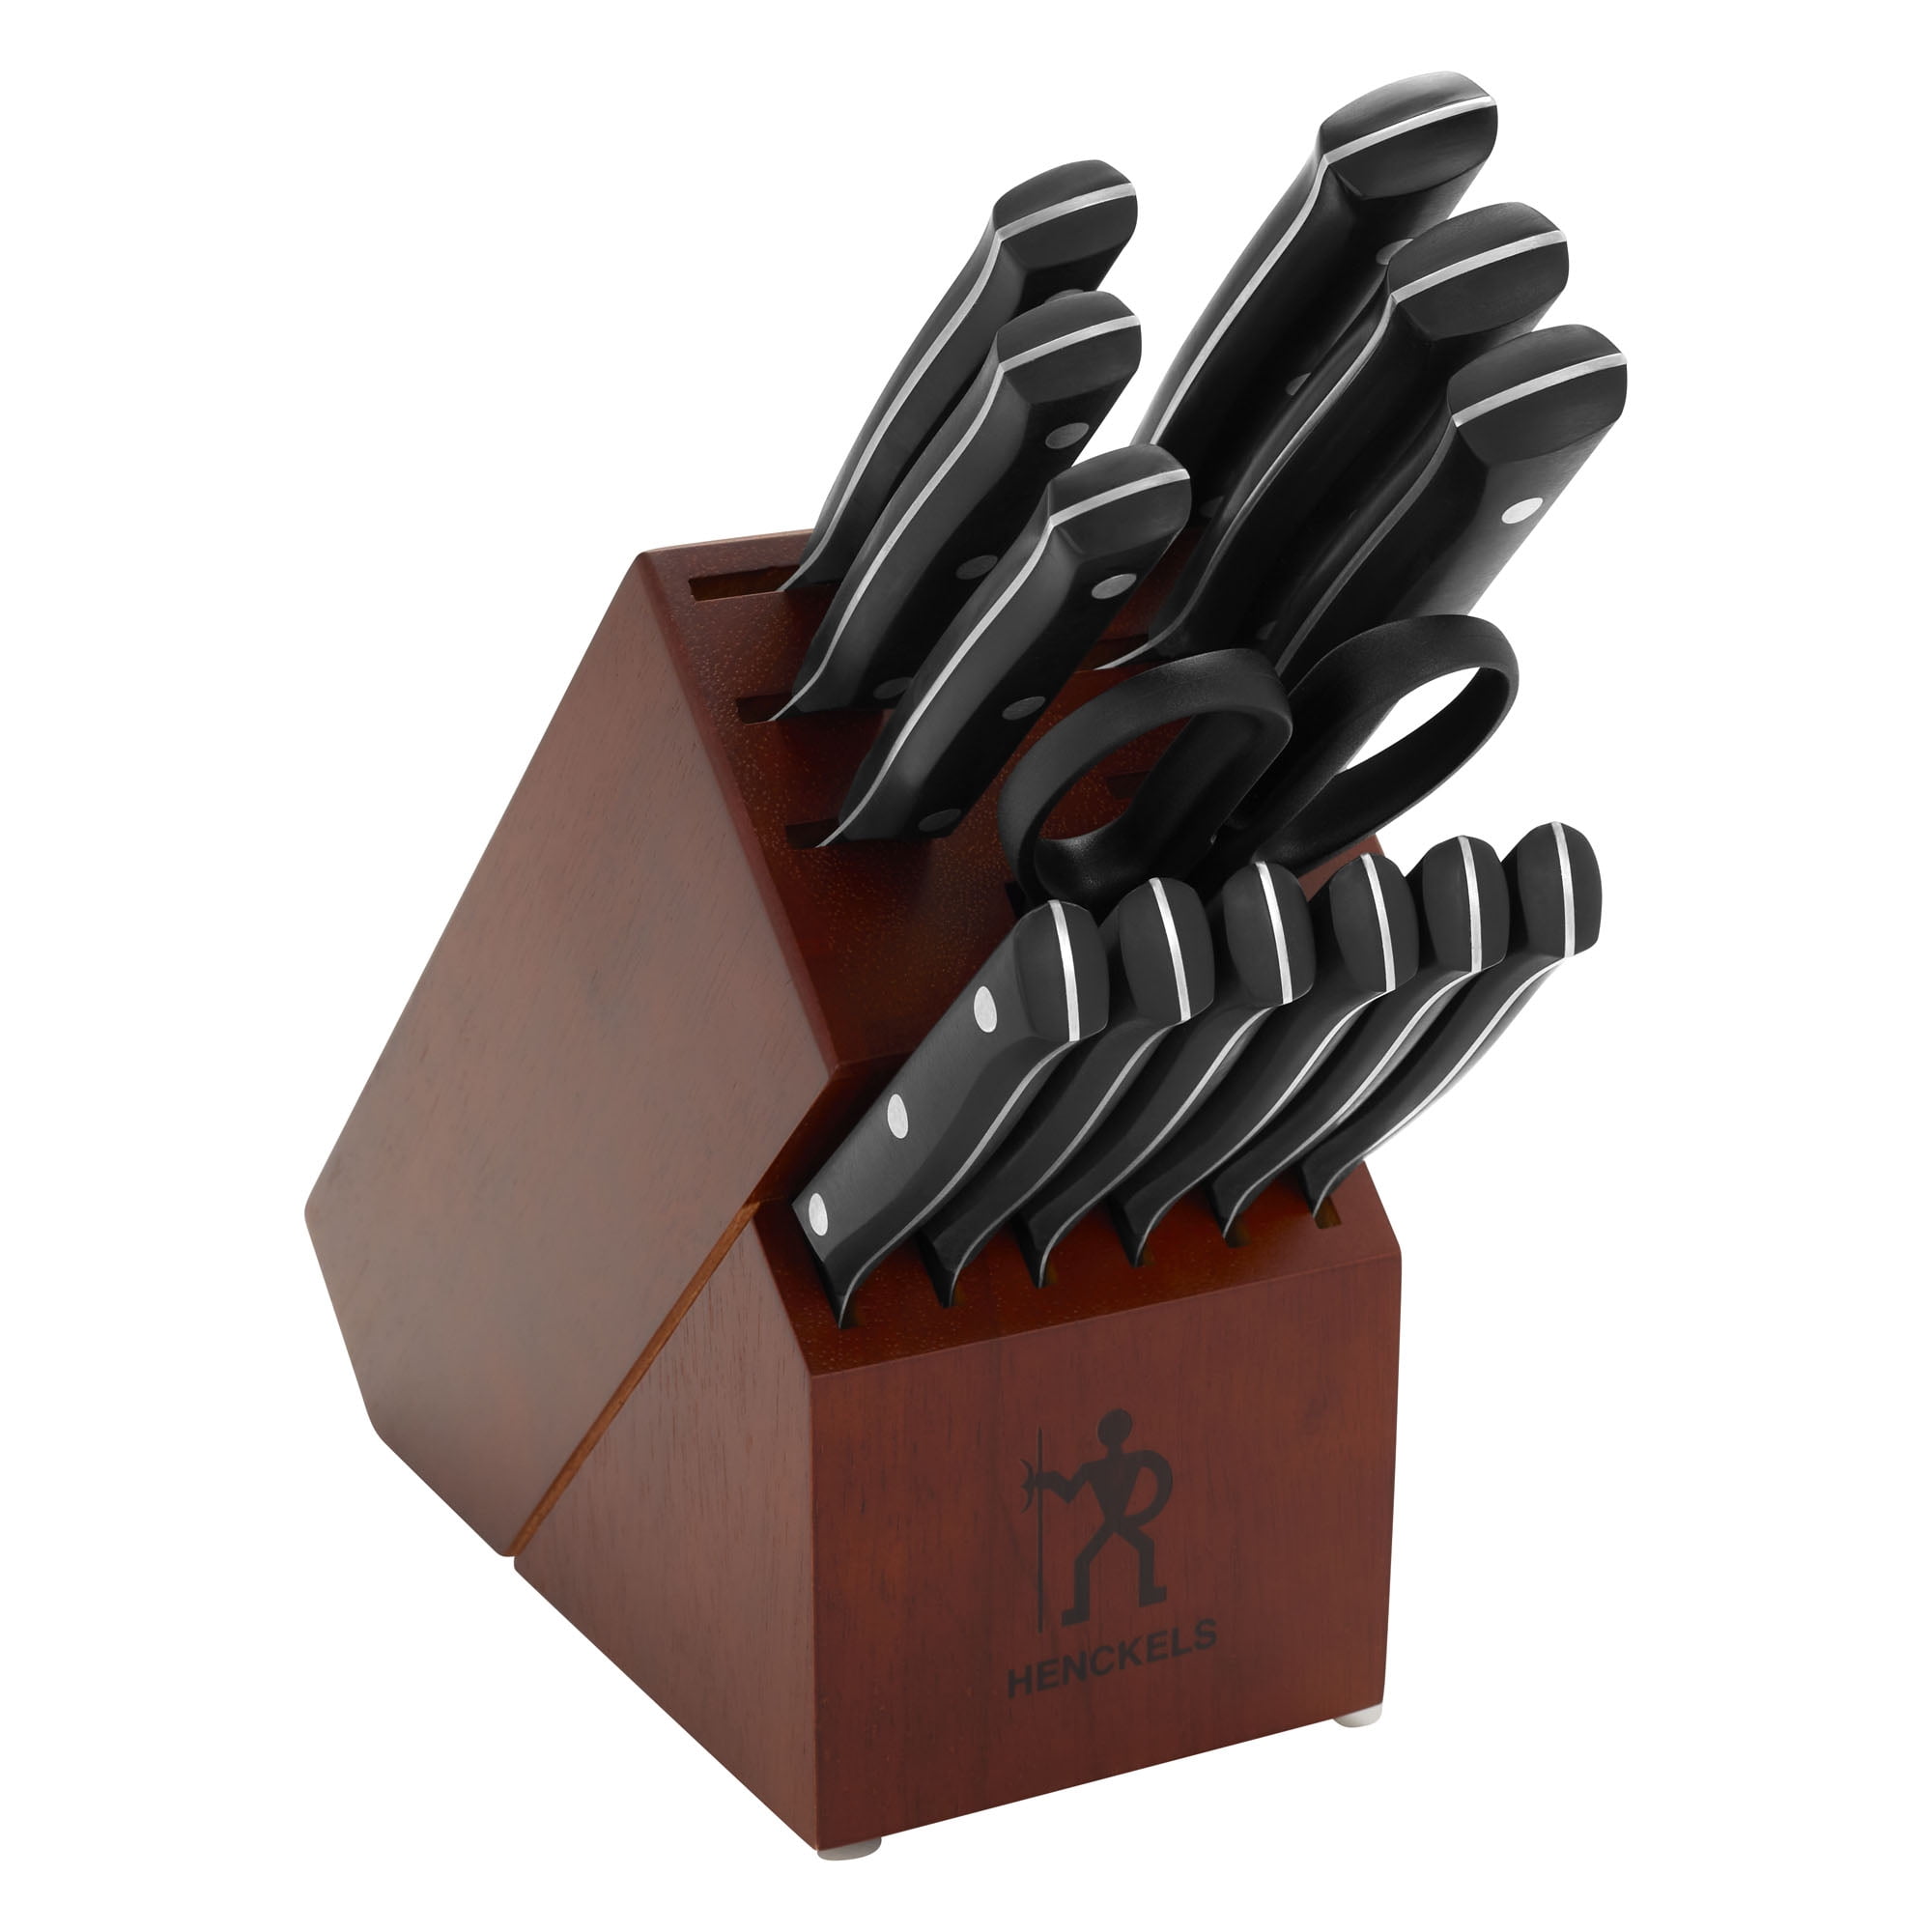 Henckels 14pc Knife Block Set, Everedge Solution Series – Premium